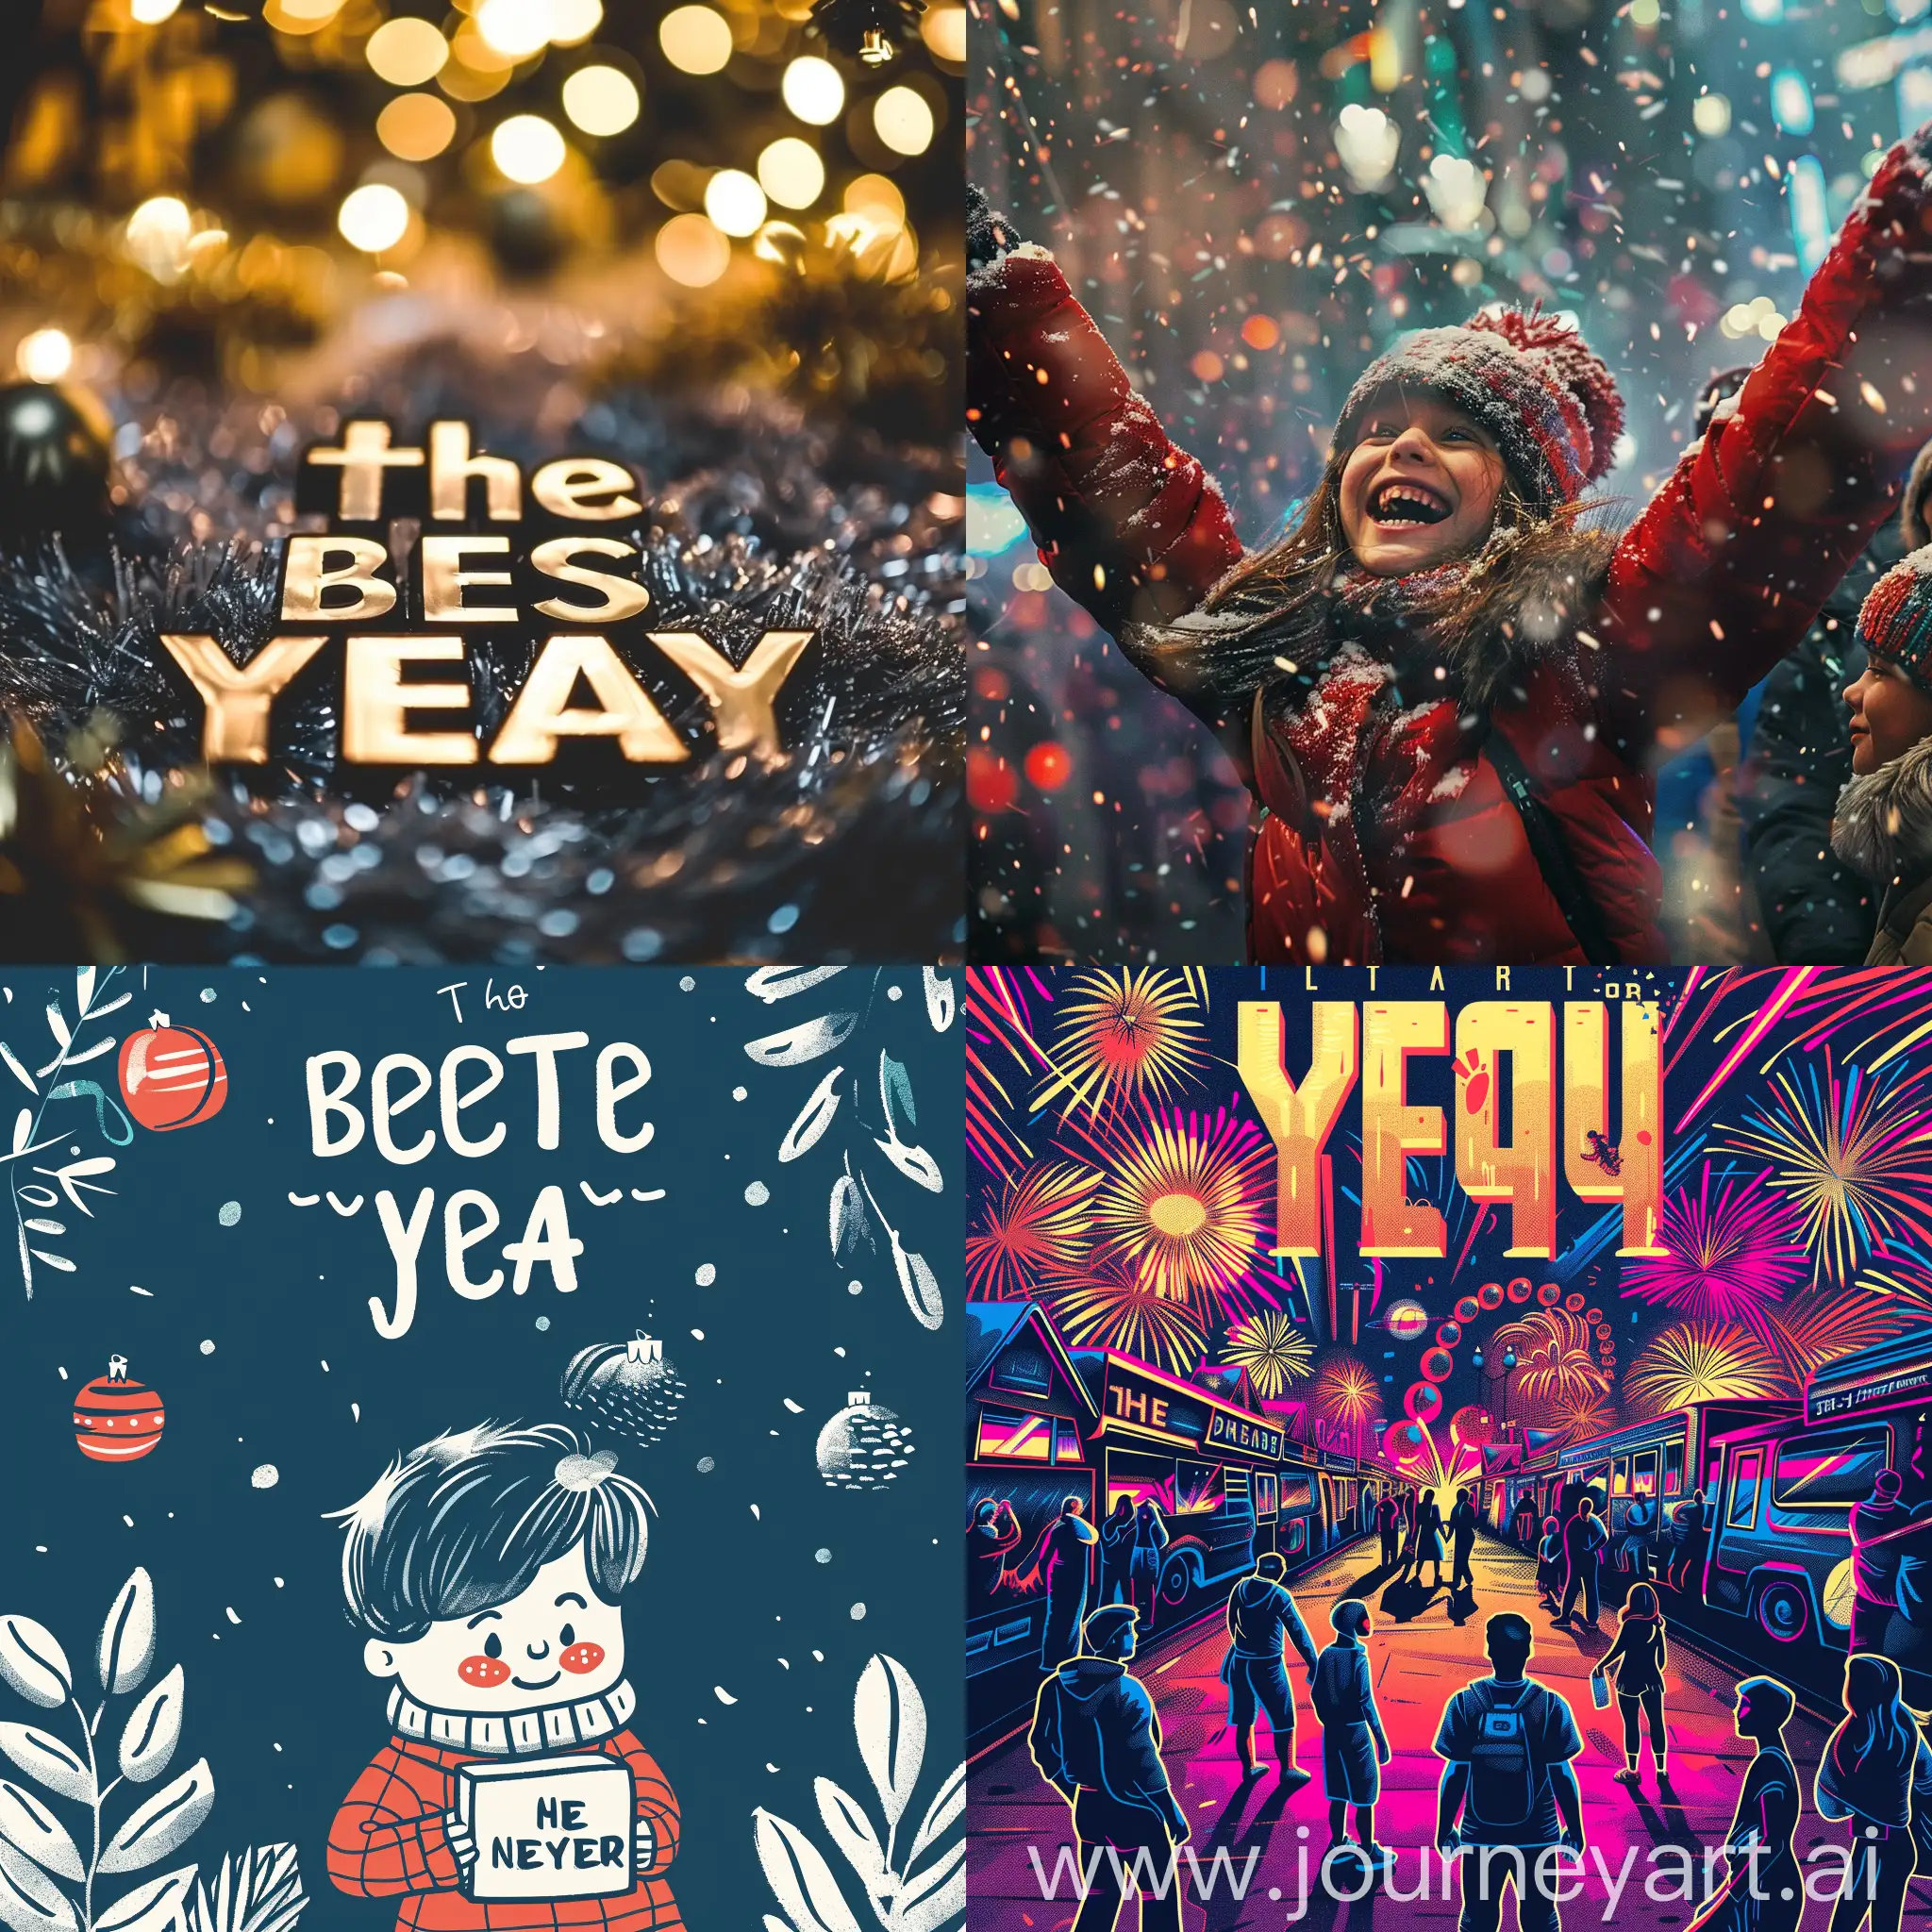 Joyful-Celebration-Vibrant-Festivities-in-the-Best-Year